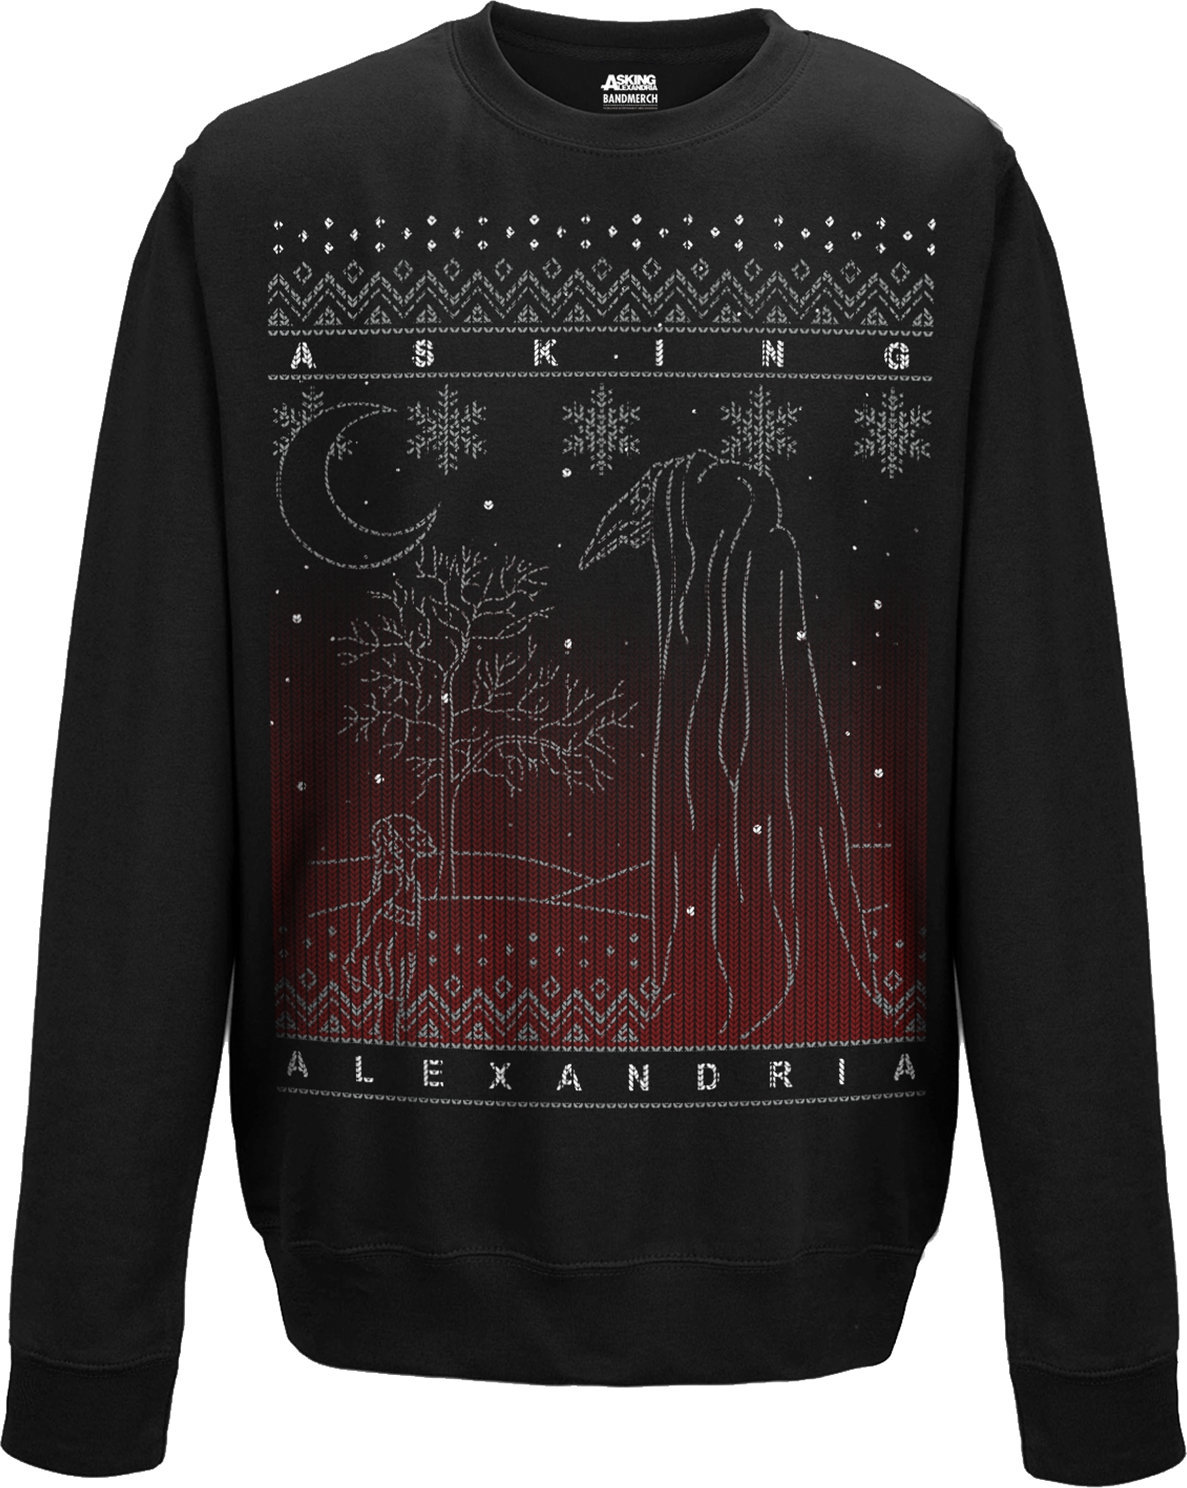 Hoodie Asking Alexandria The Black Christmas Crew Neck Sweater XXL